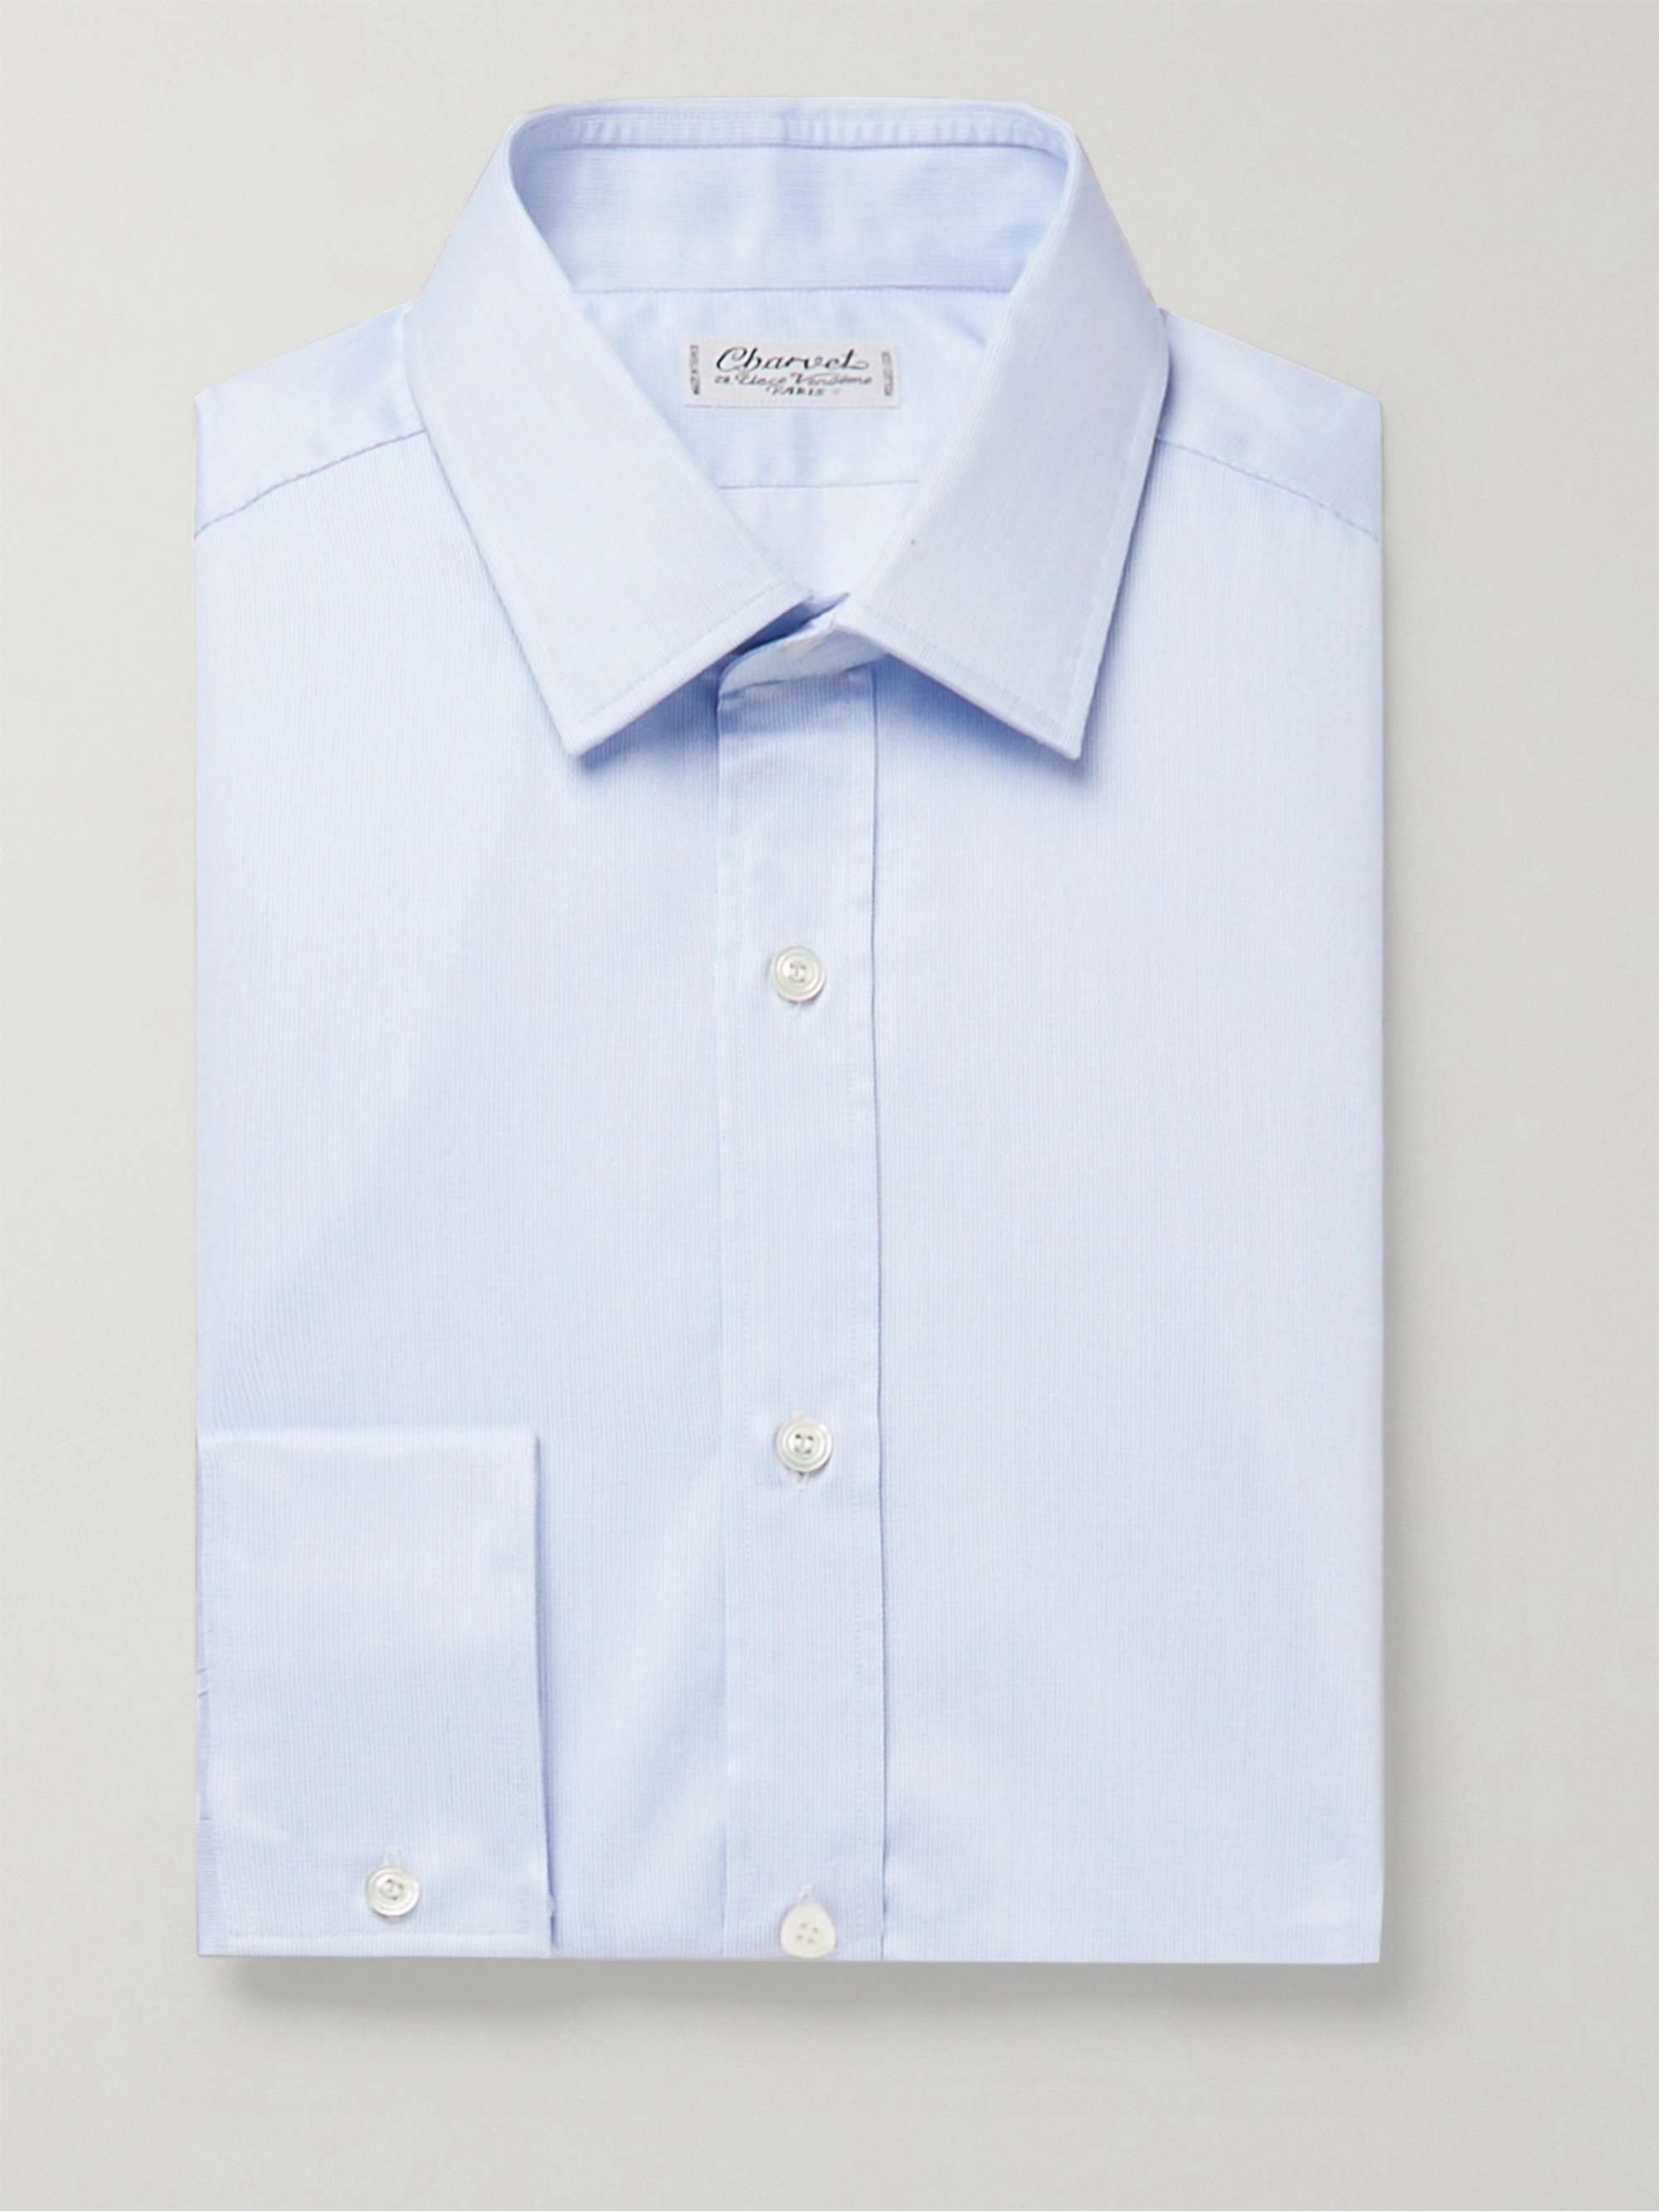 CHARVET Light-Blue Cotton Shirt